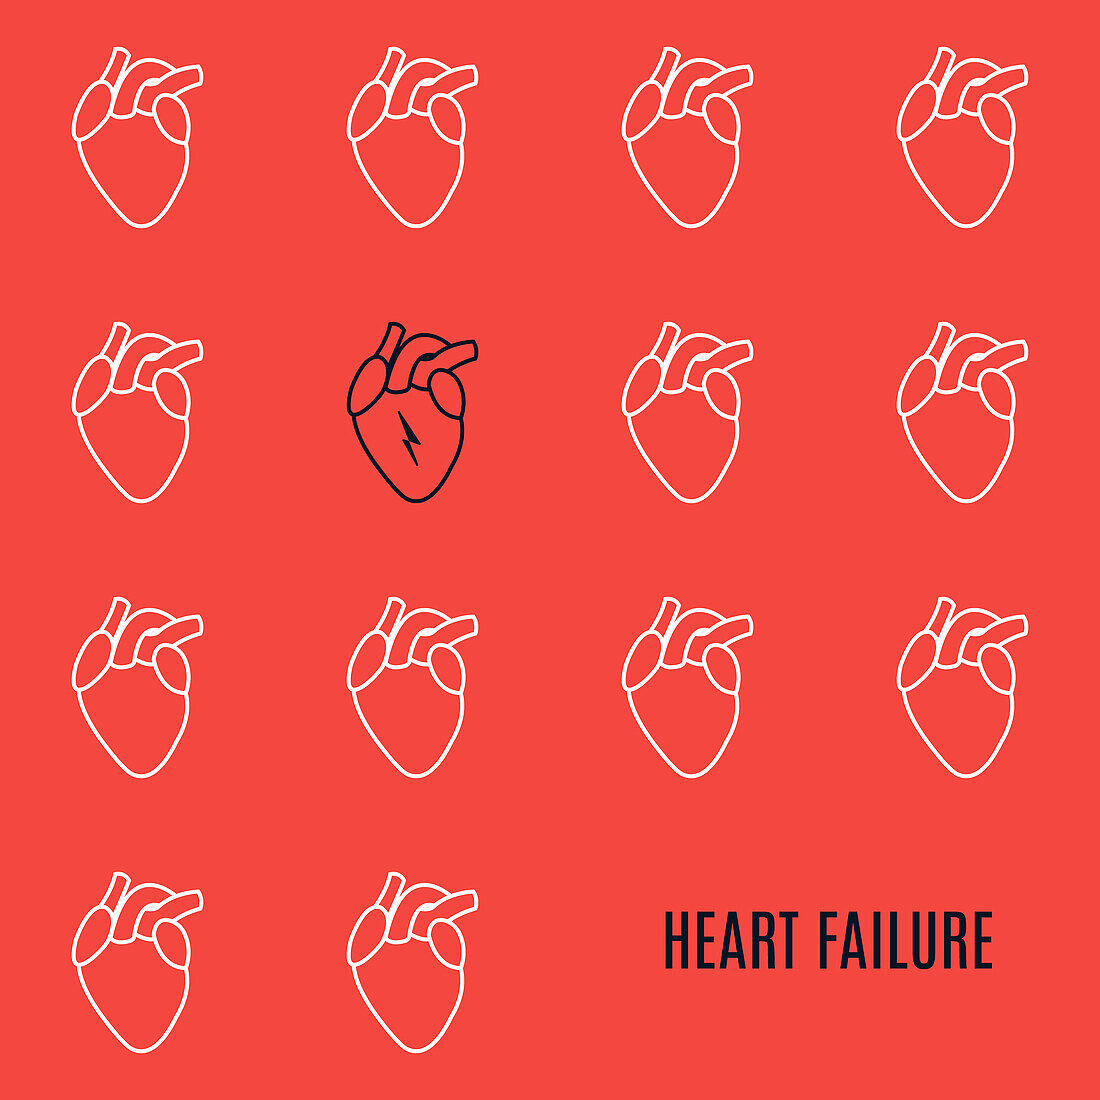 Heart failure, conceptual illustration